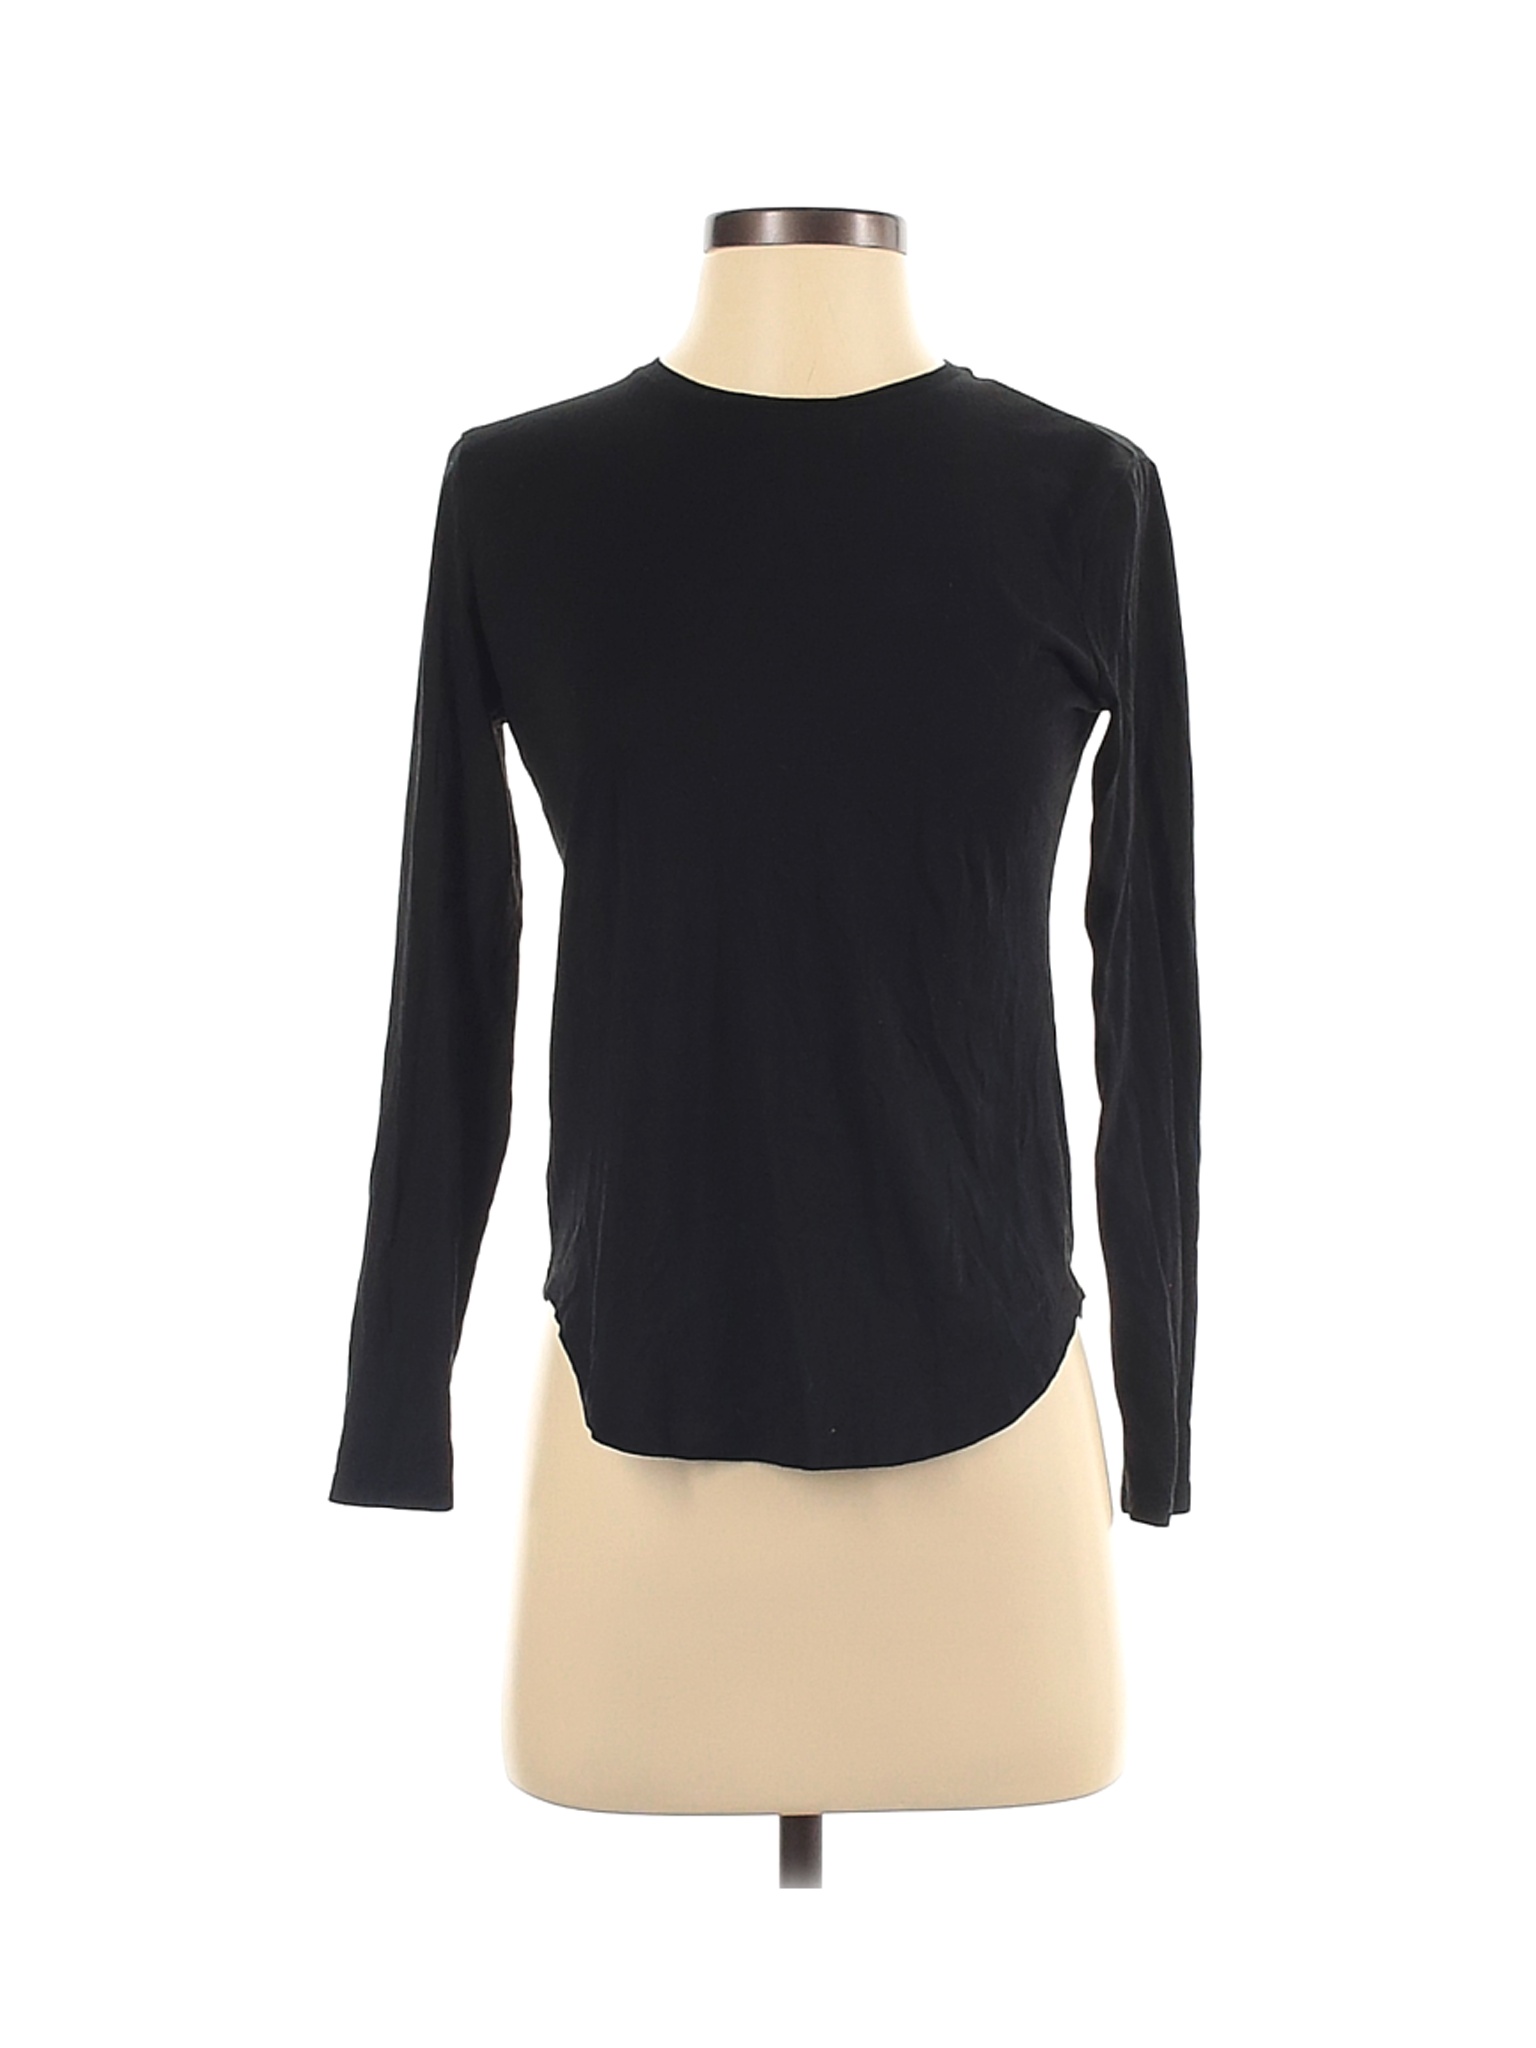 Ann Taylor Women Black Long Sleeve T-Shirt S Petites | eBay